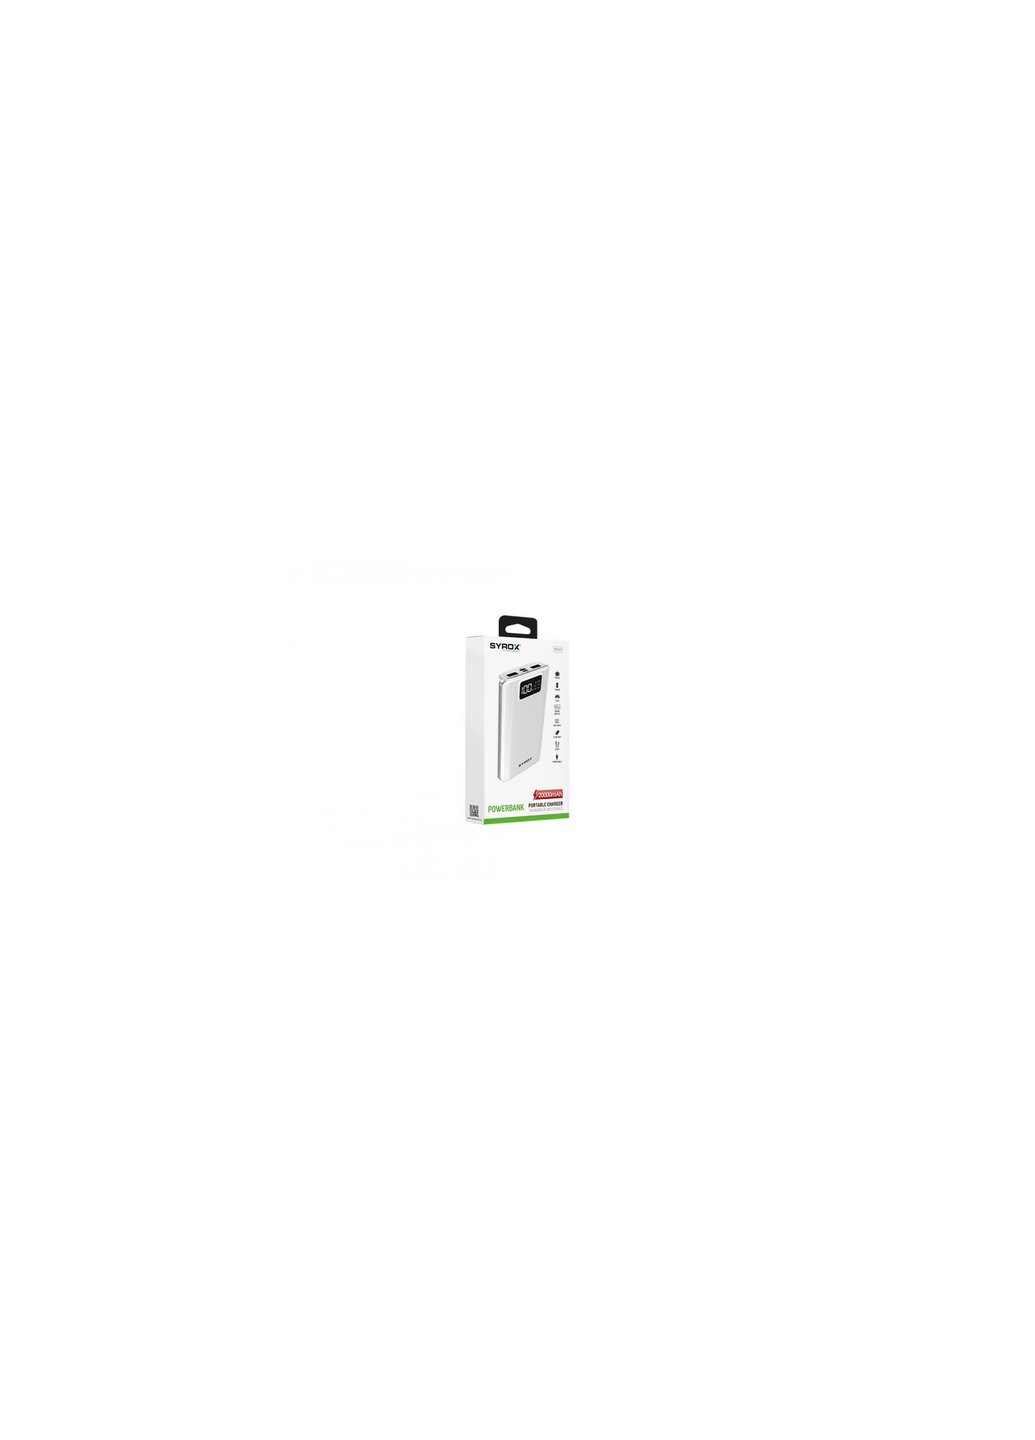 Батарея универсальная PB107 20000mAh, USB*2, Micro USB, Type C, white (PB107_white) Syrox